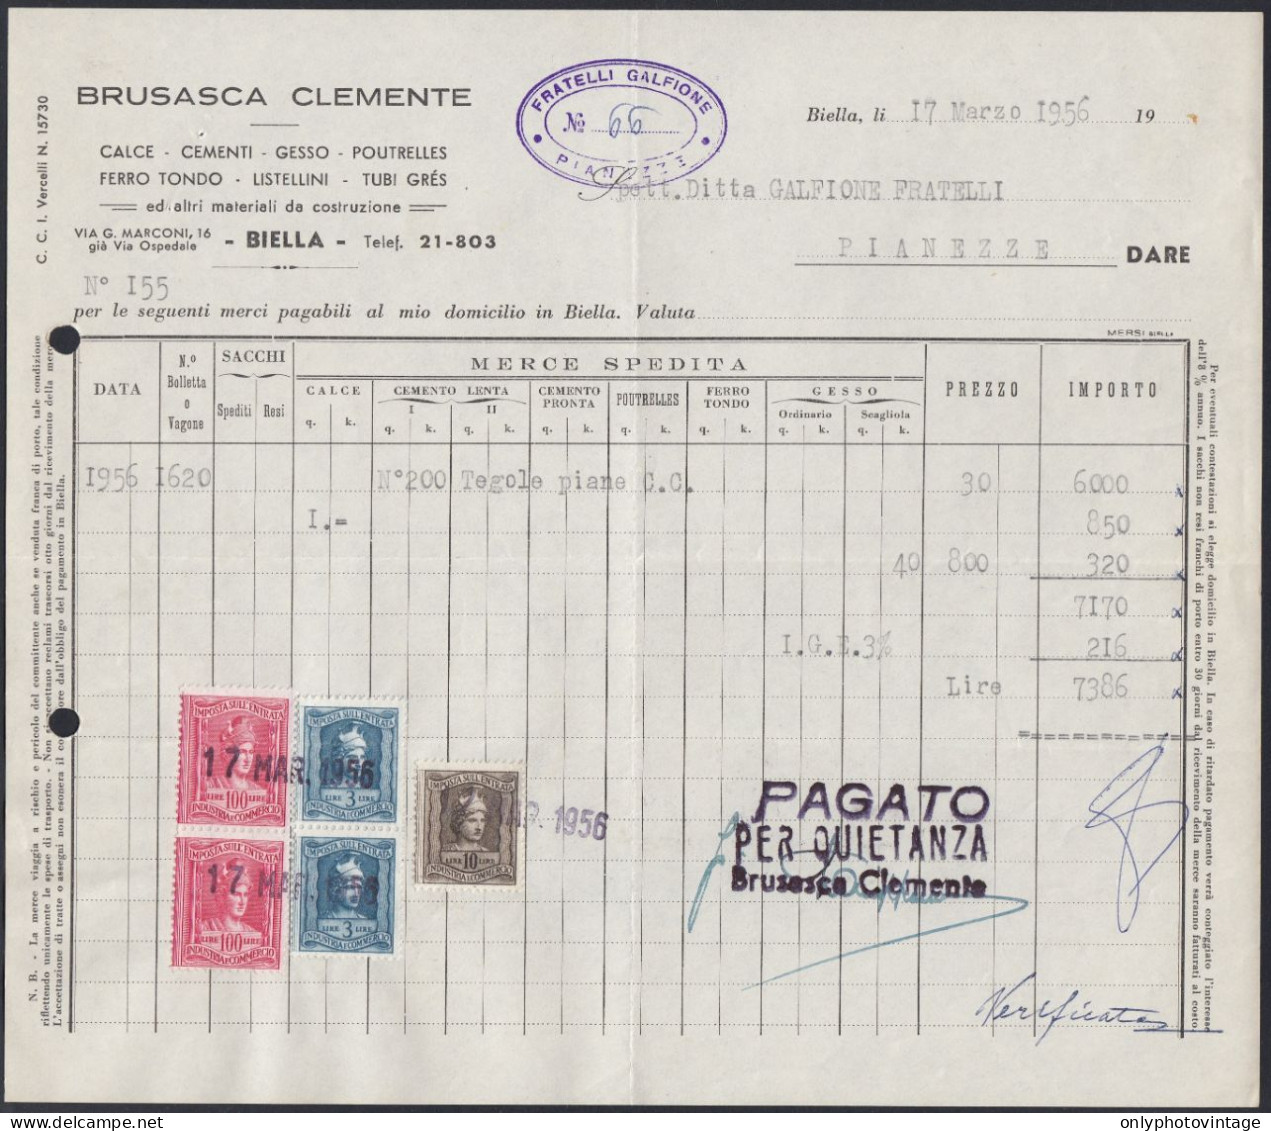 Biella 1956 - Brusasca Clemente - Materiale Da Costruzione - Fattura - Italy